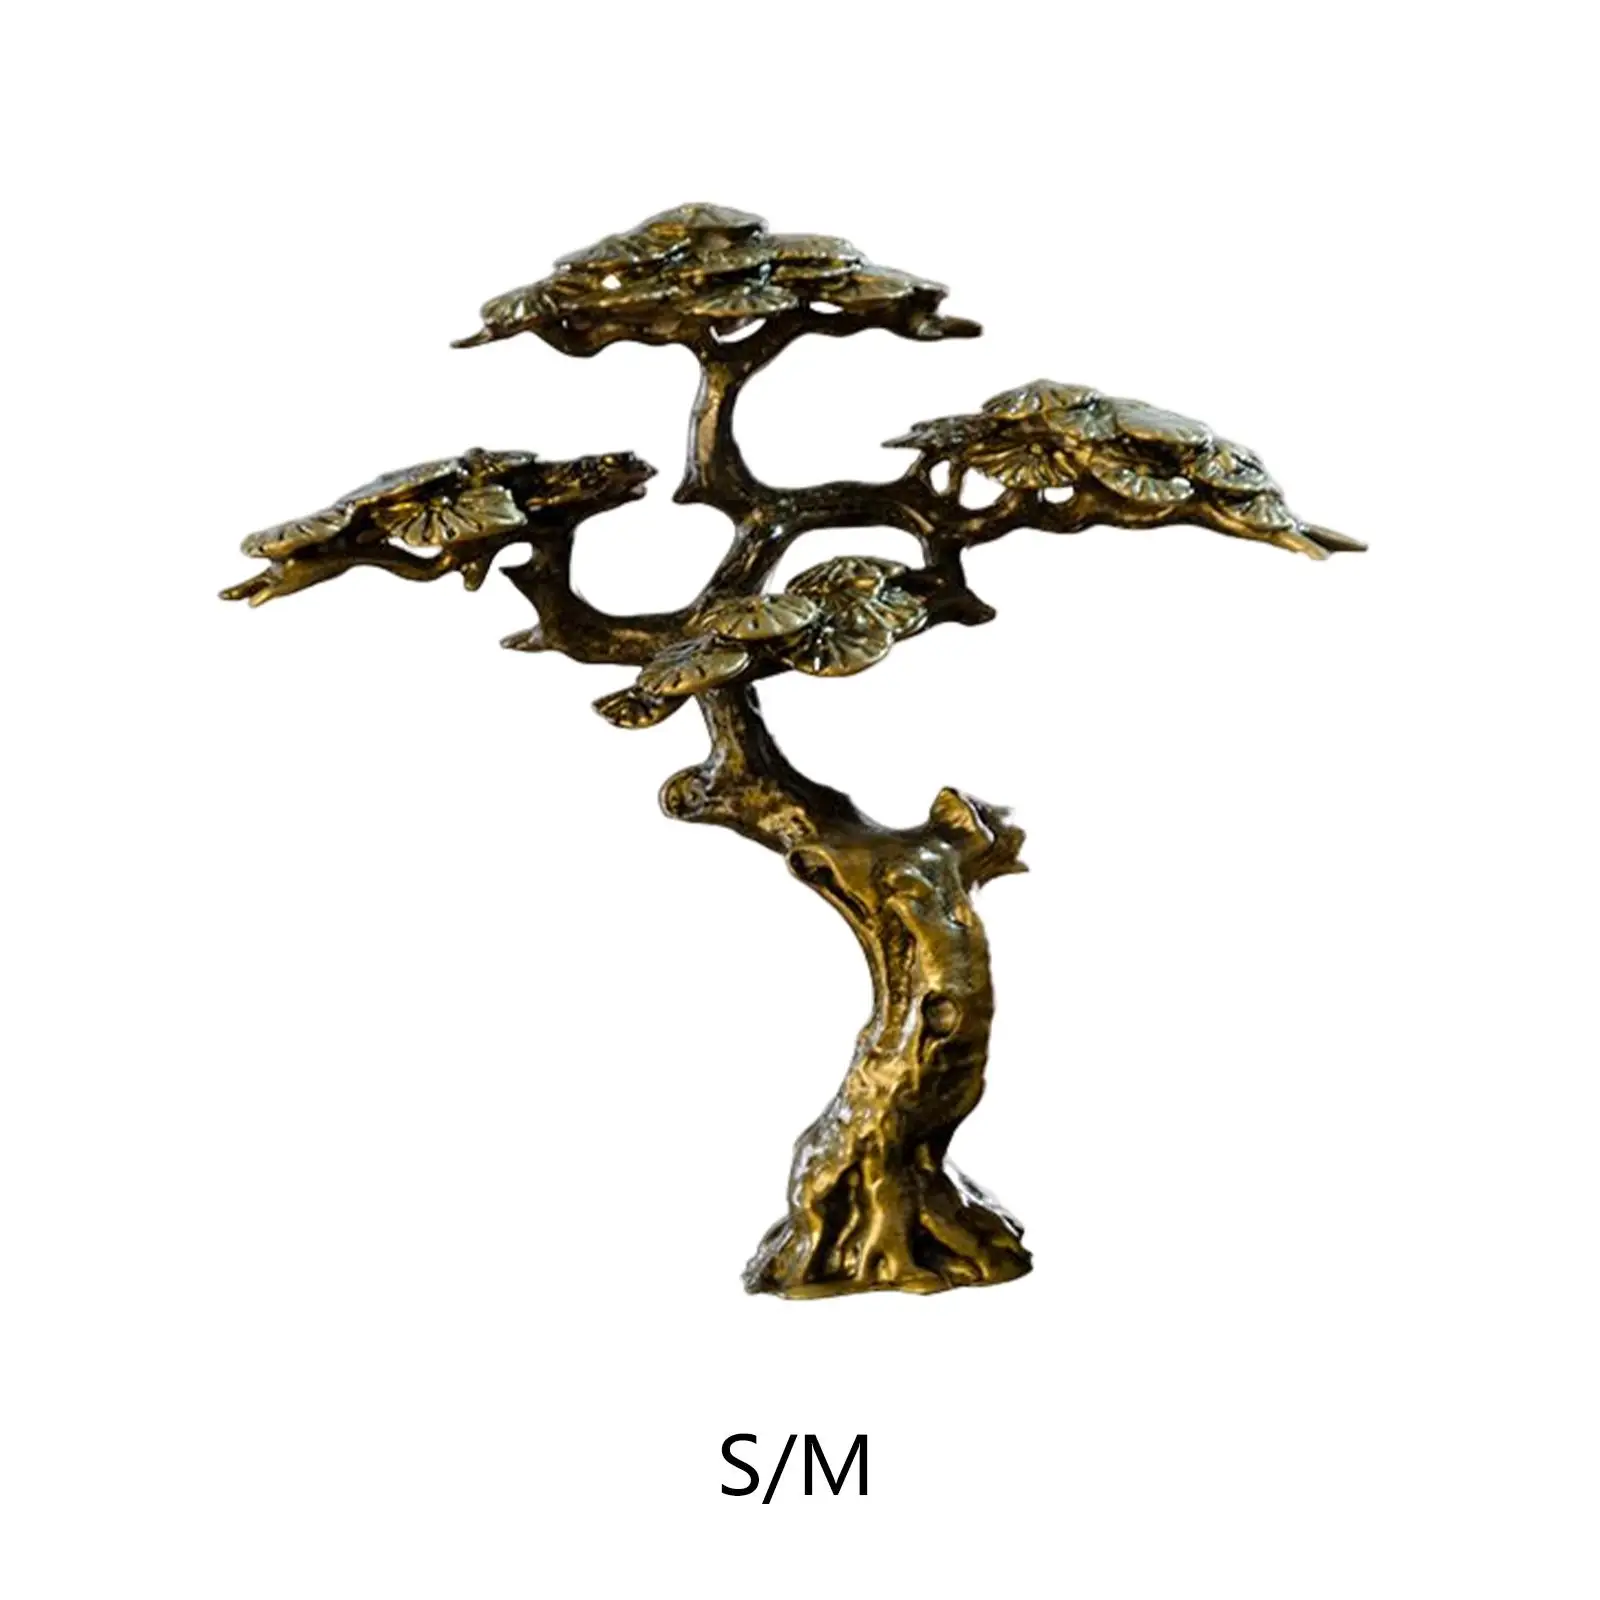 

Antique Tree Statue Miniature Figurine Metal Sculpture Mini Pine Ornament for Bonsai Micro Landscape Flowerpot Home Decor